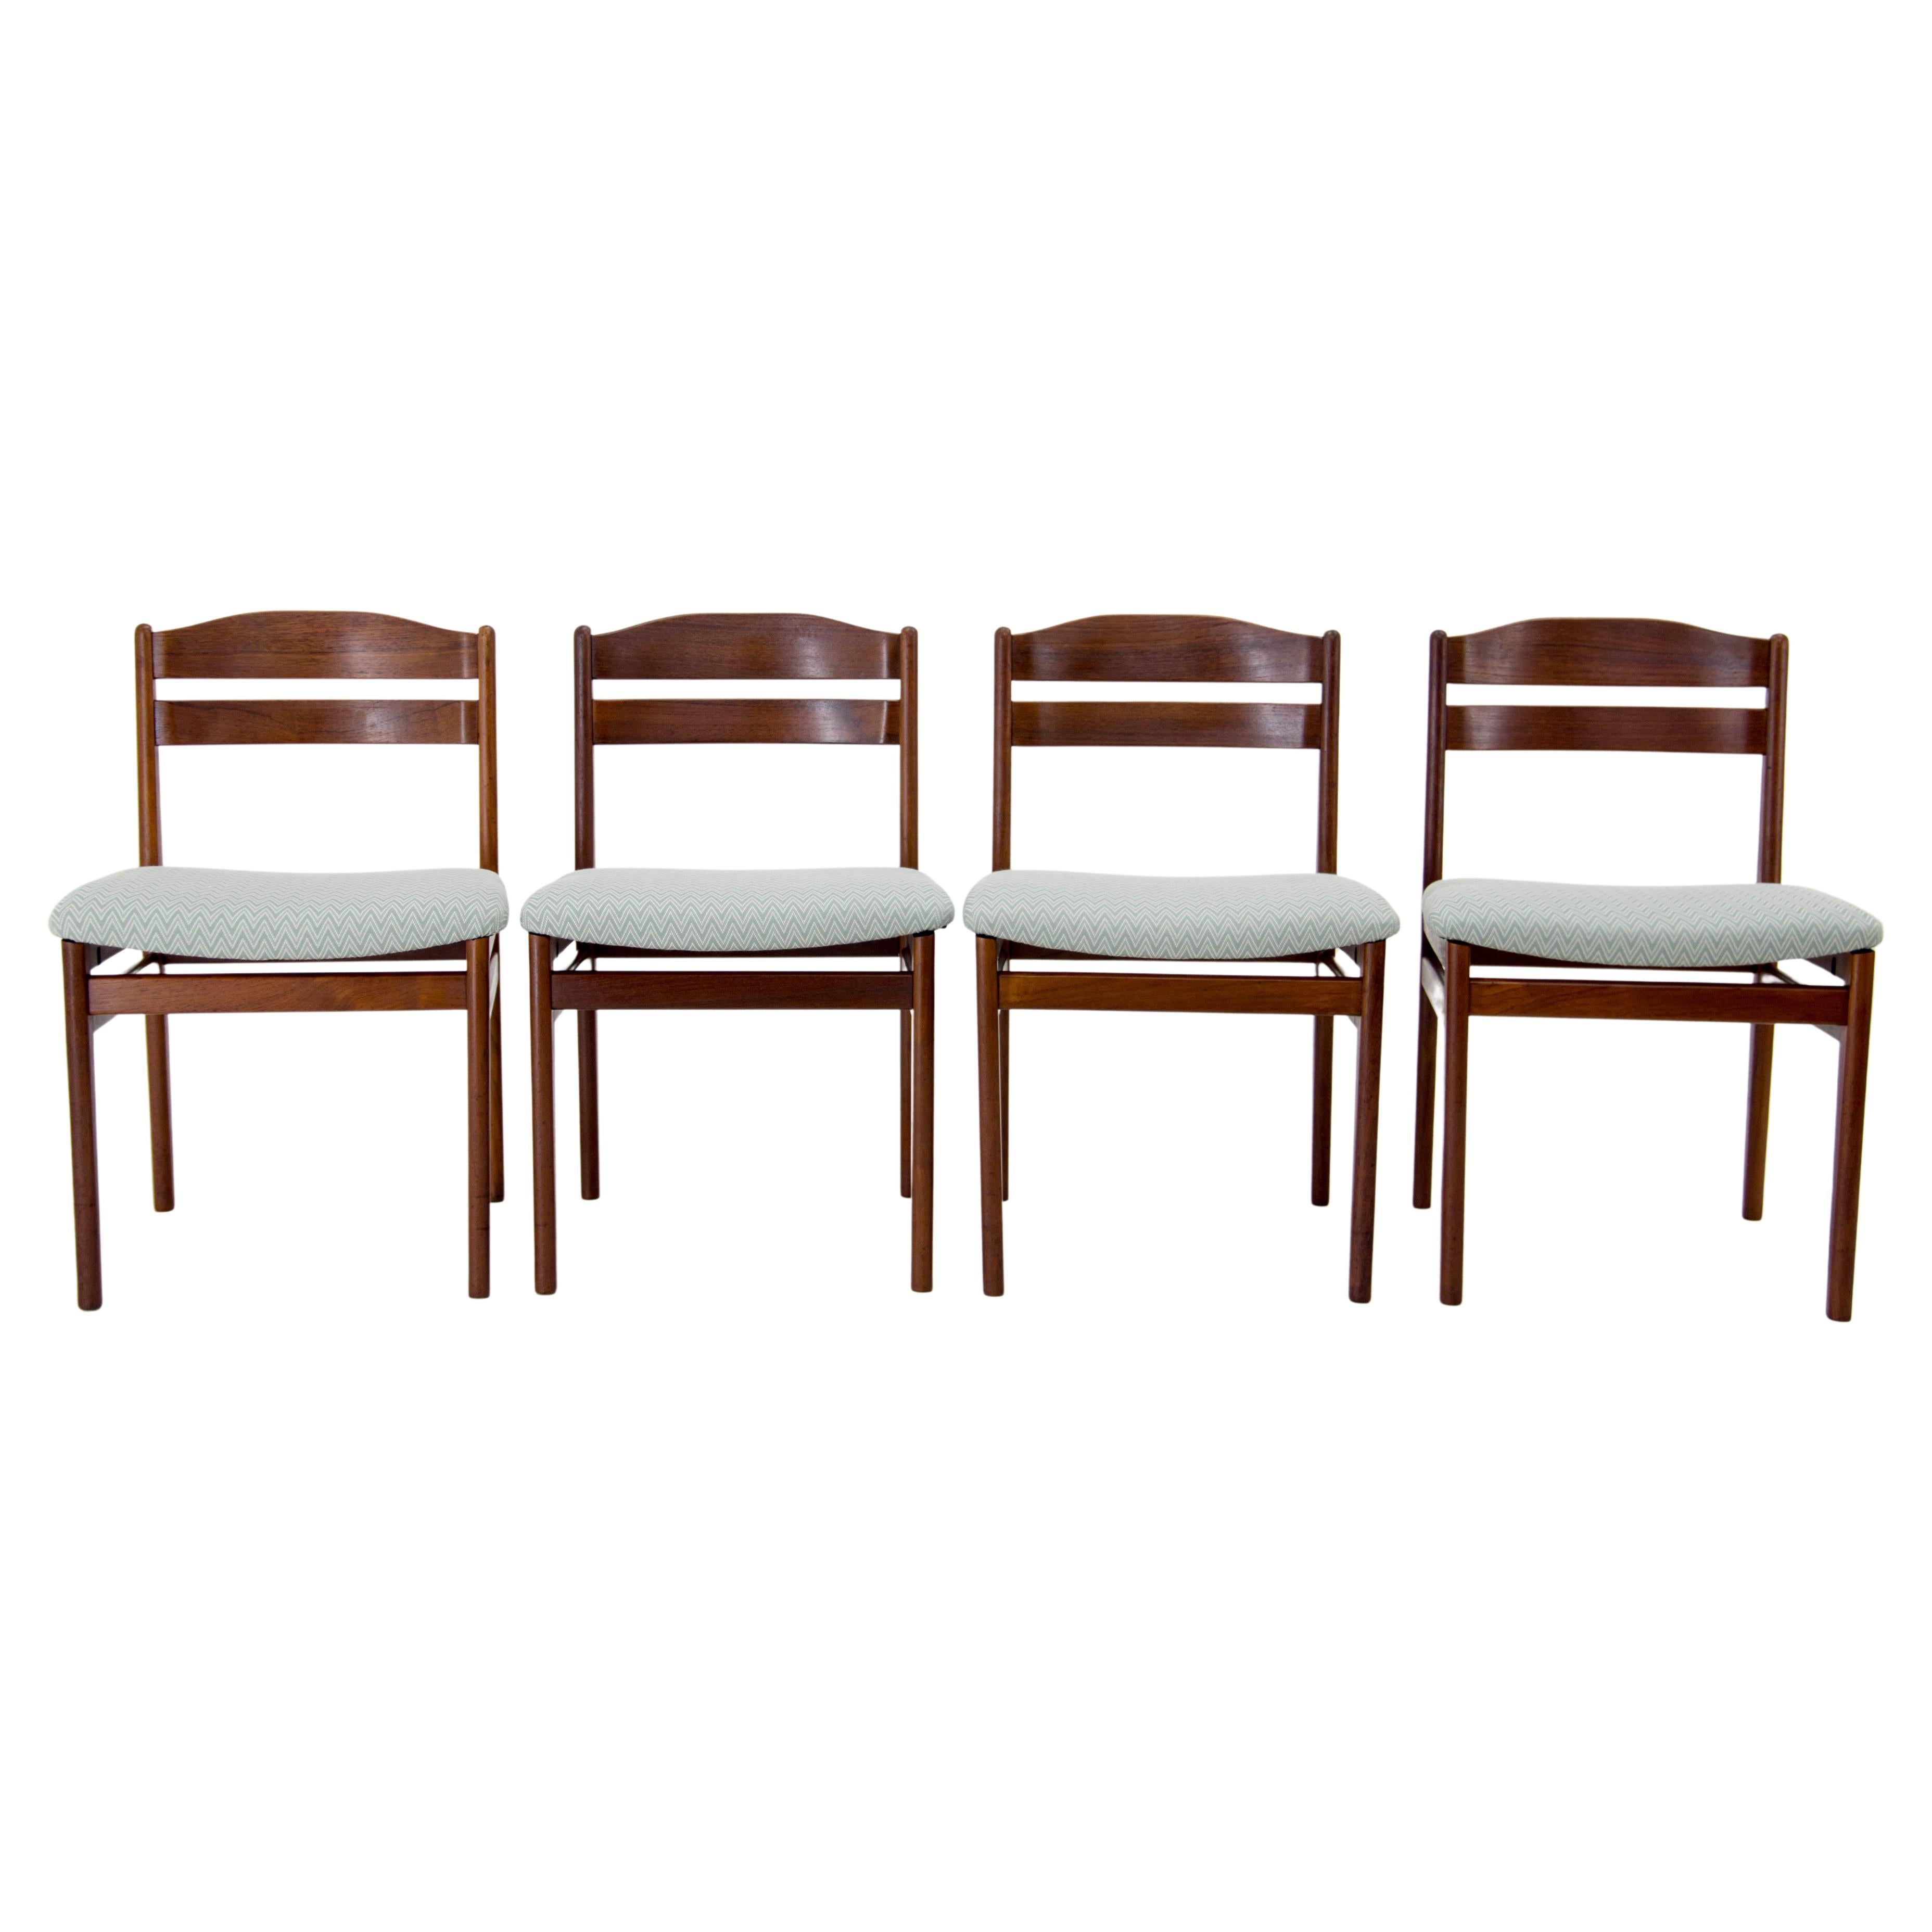 Set of Four Teak Dining Chairs, Denmark, 1960s